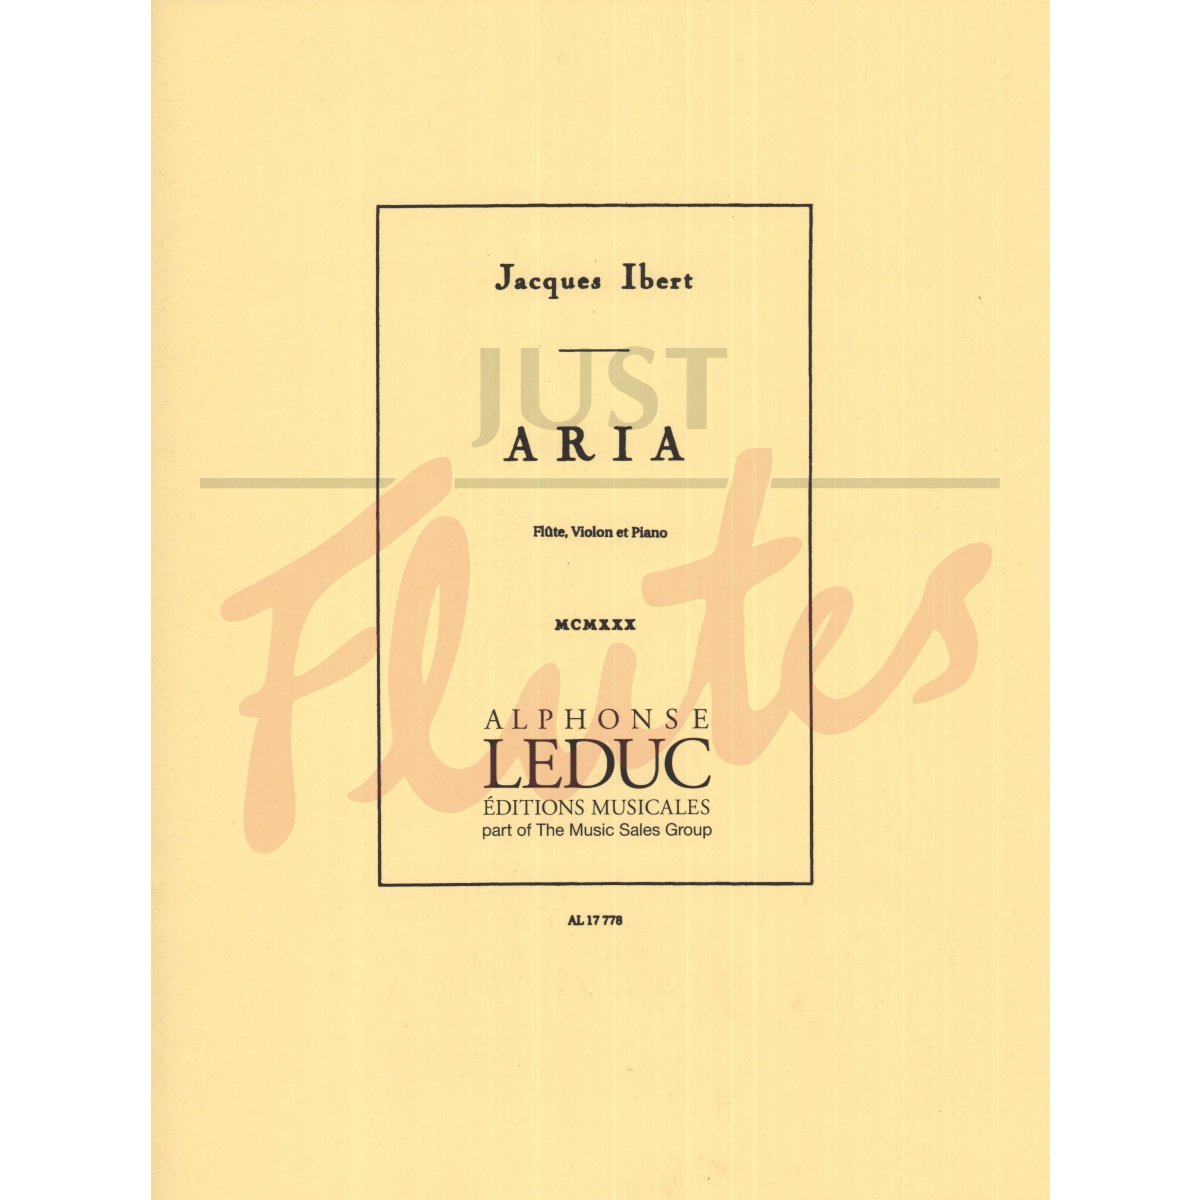 Aria for Flute, Violin and Piano